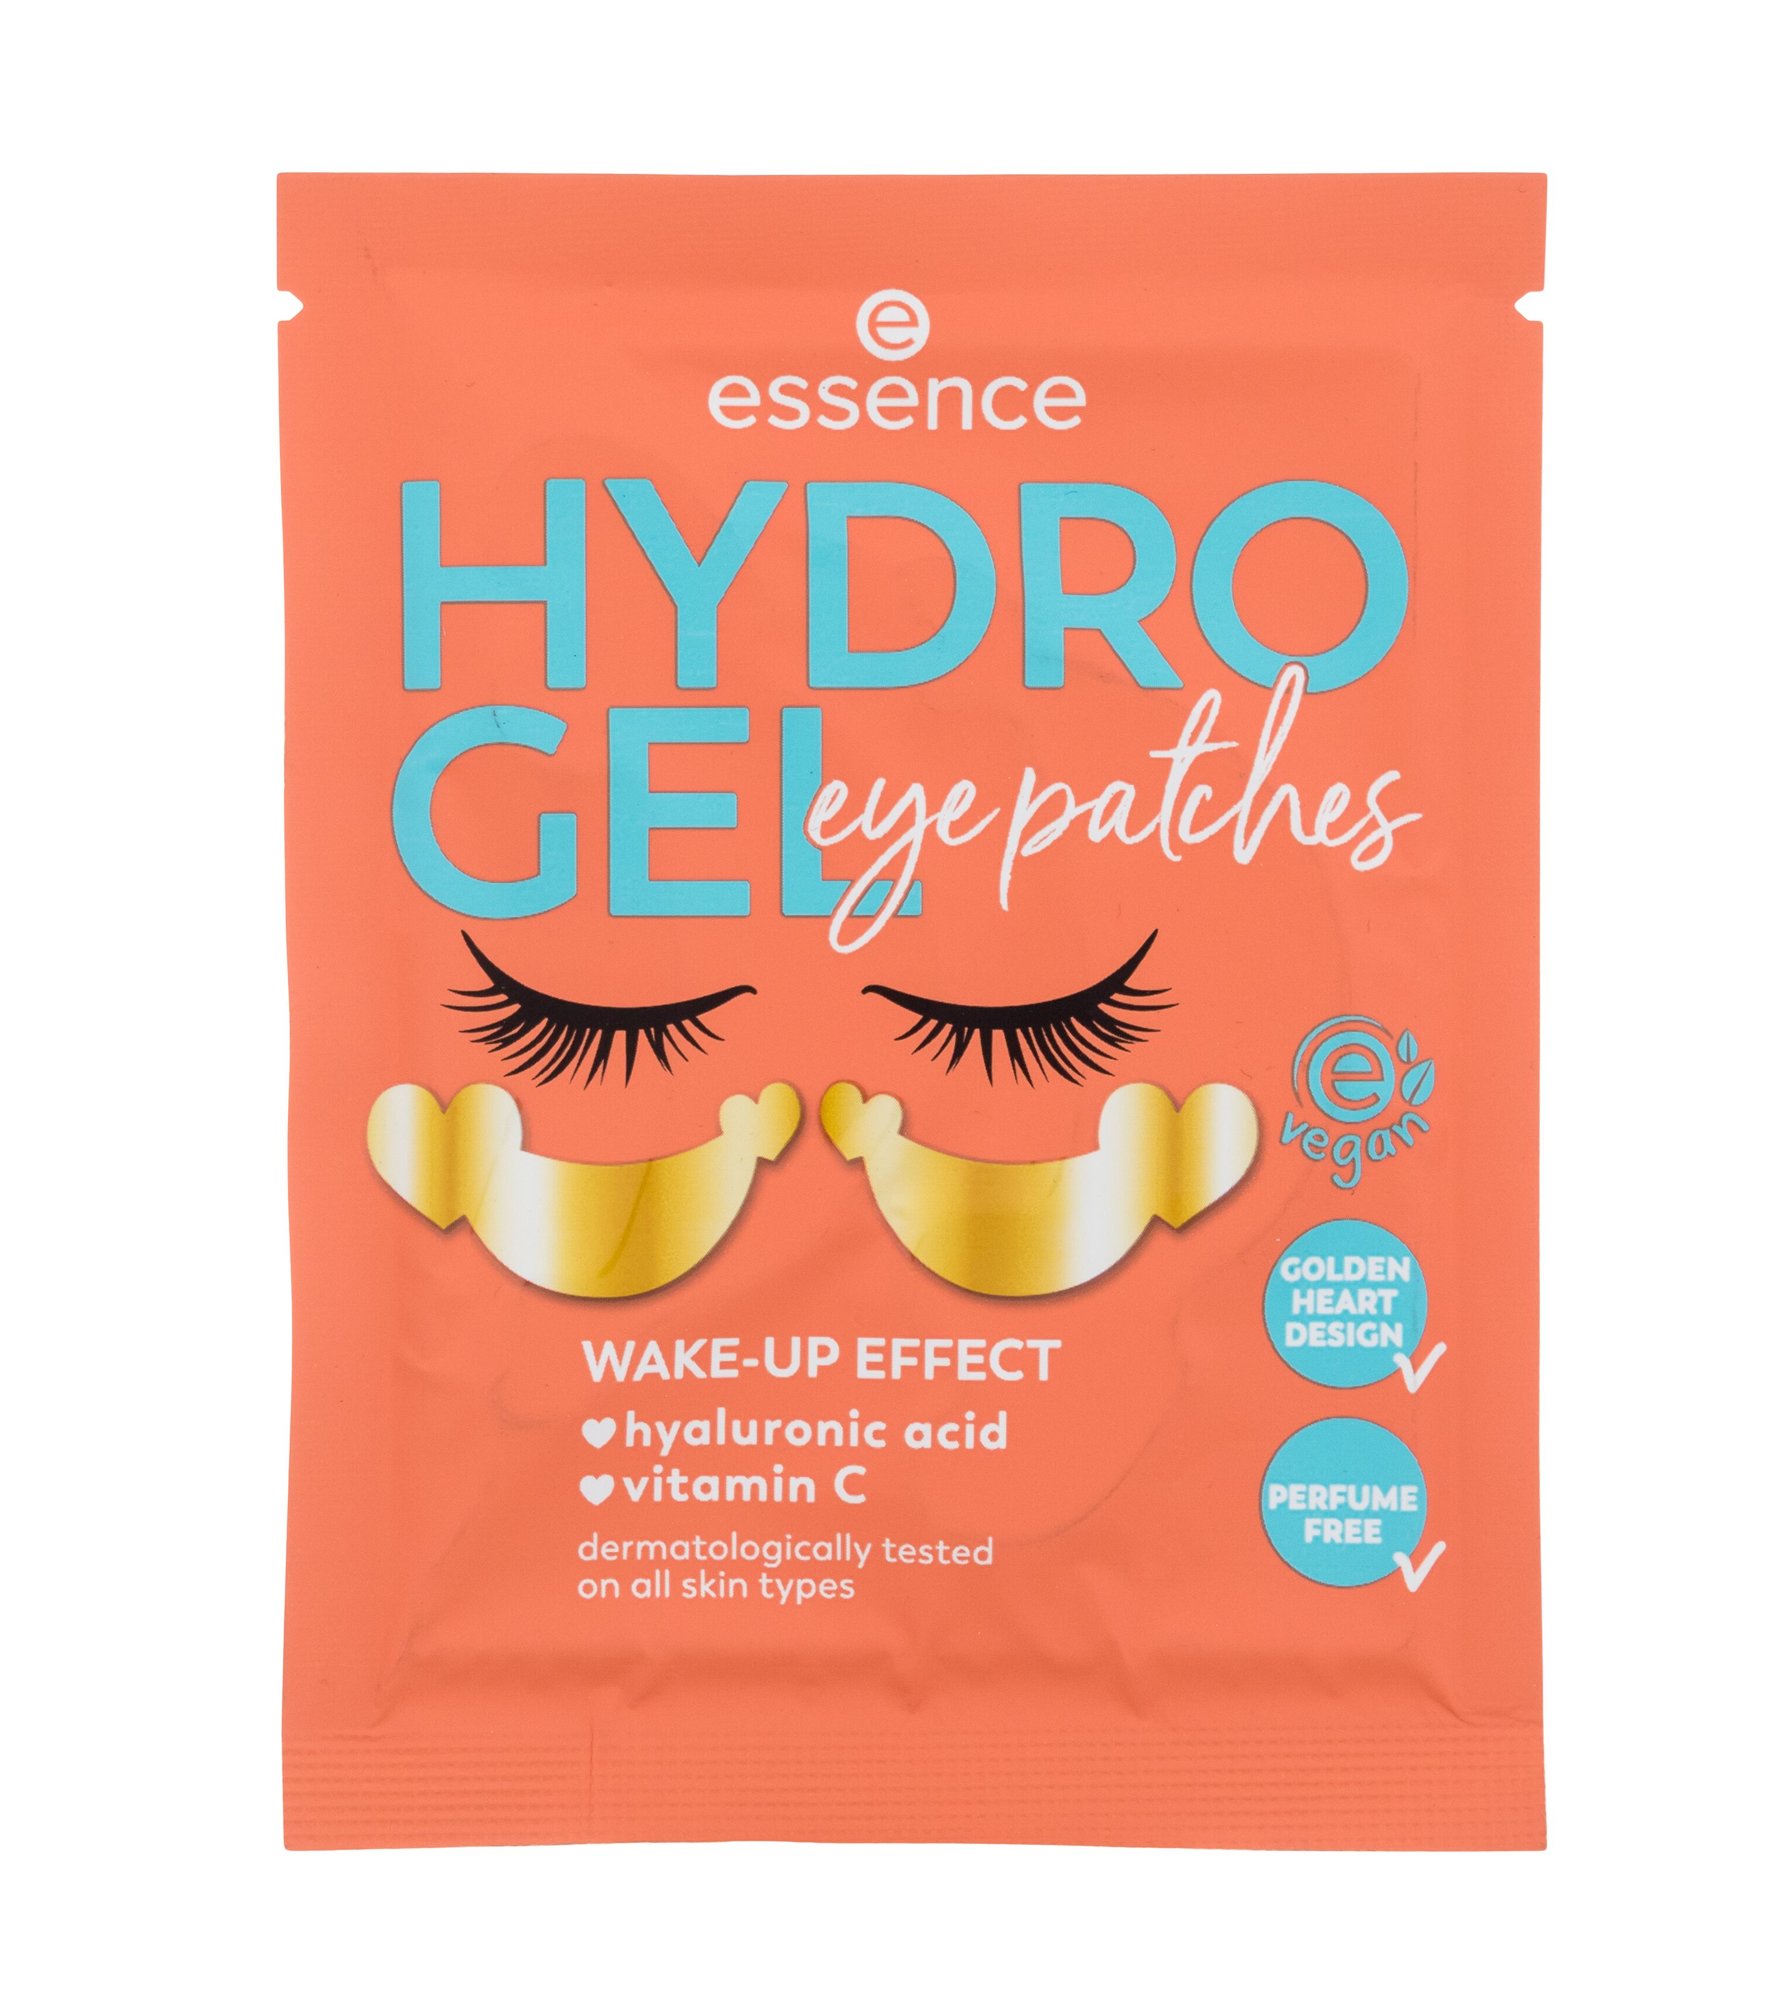 Essence Hydro Gel Eye Patches Wake-Up Effect paakių kaukė